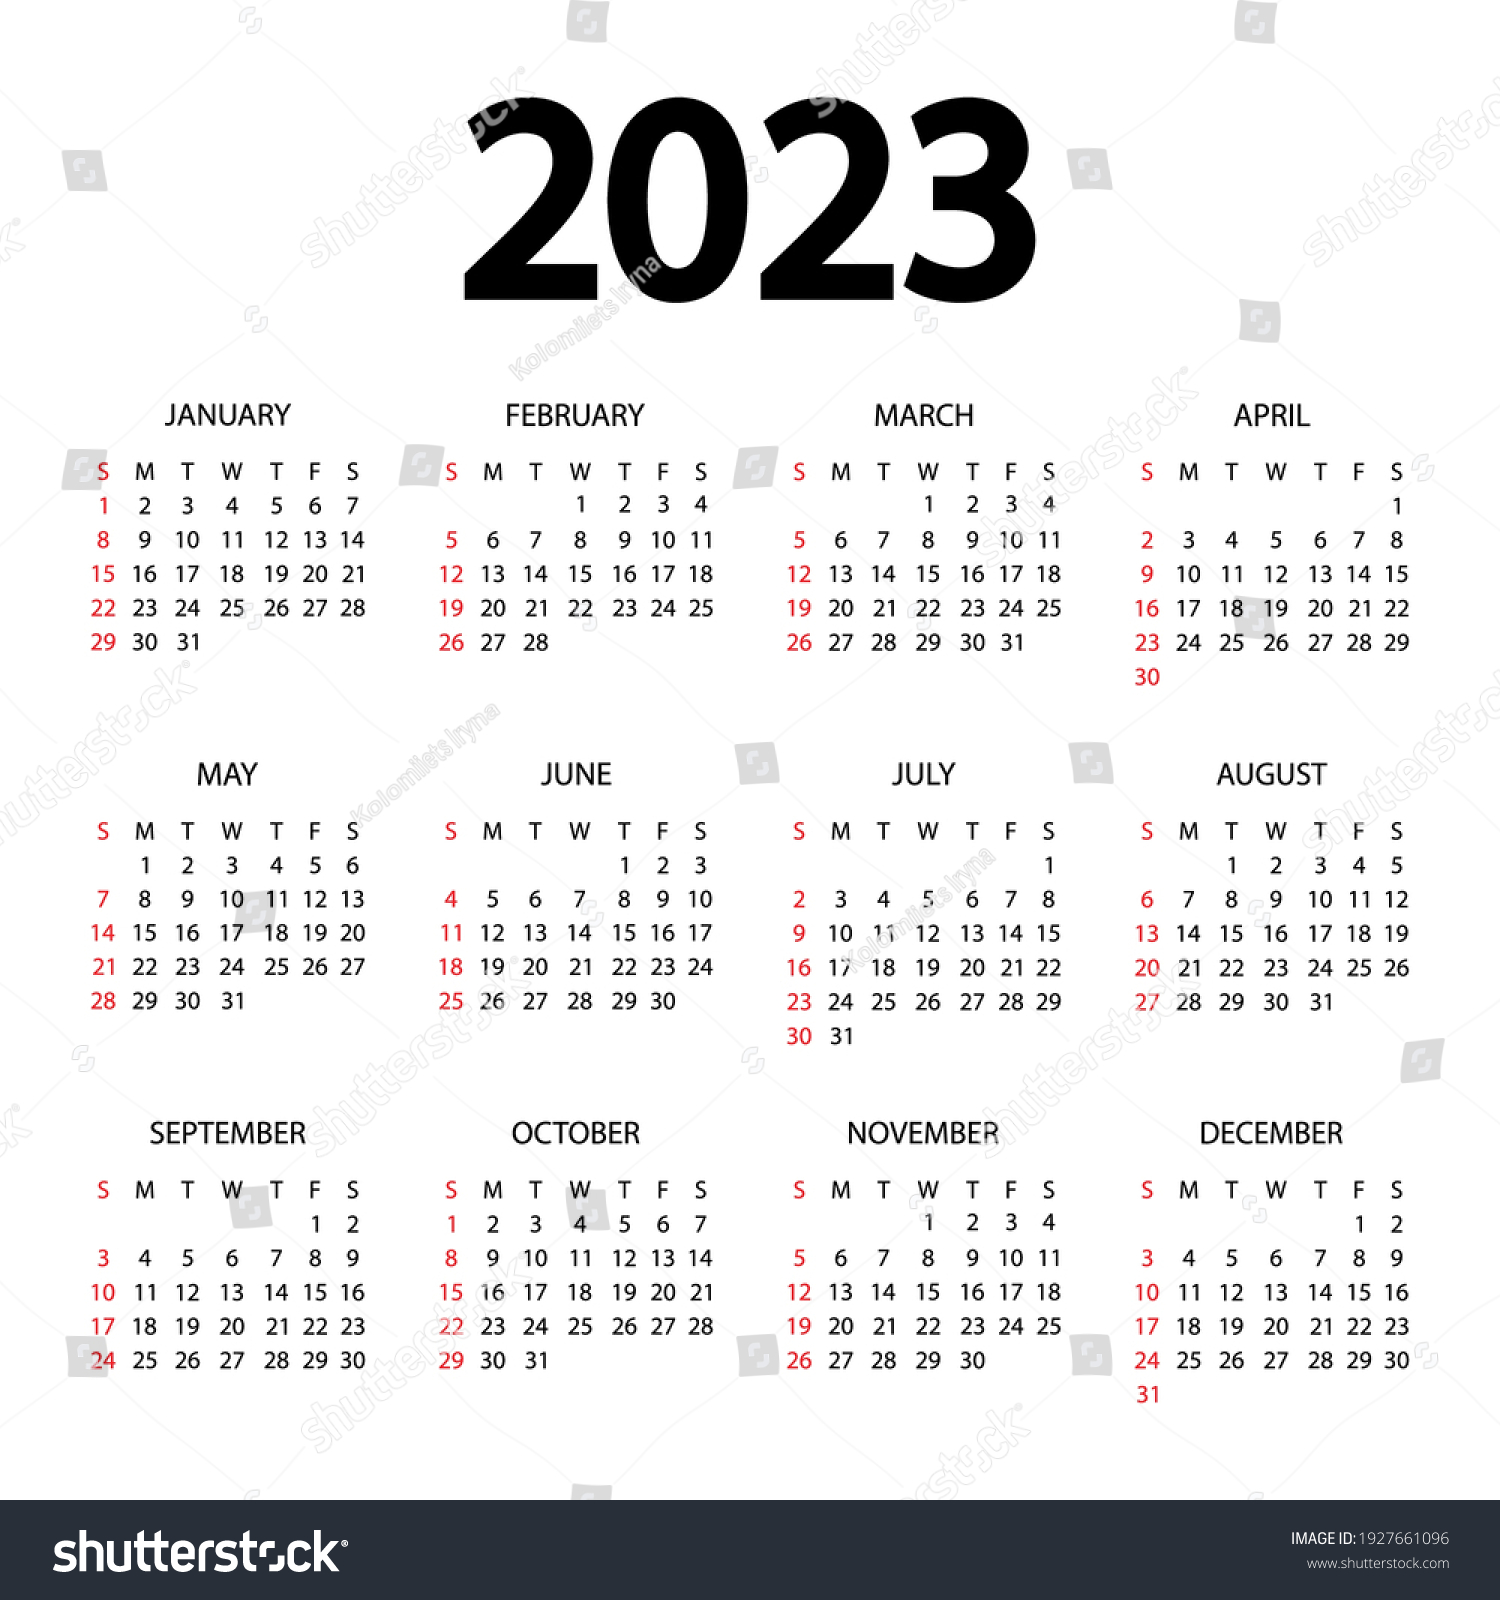 August Kalender 2023